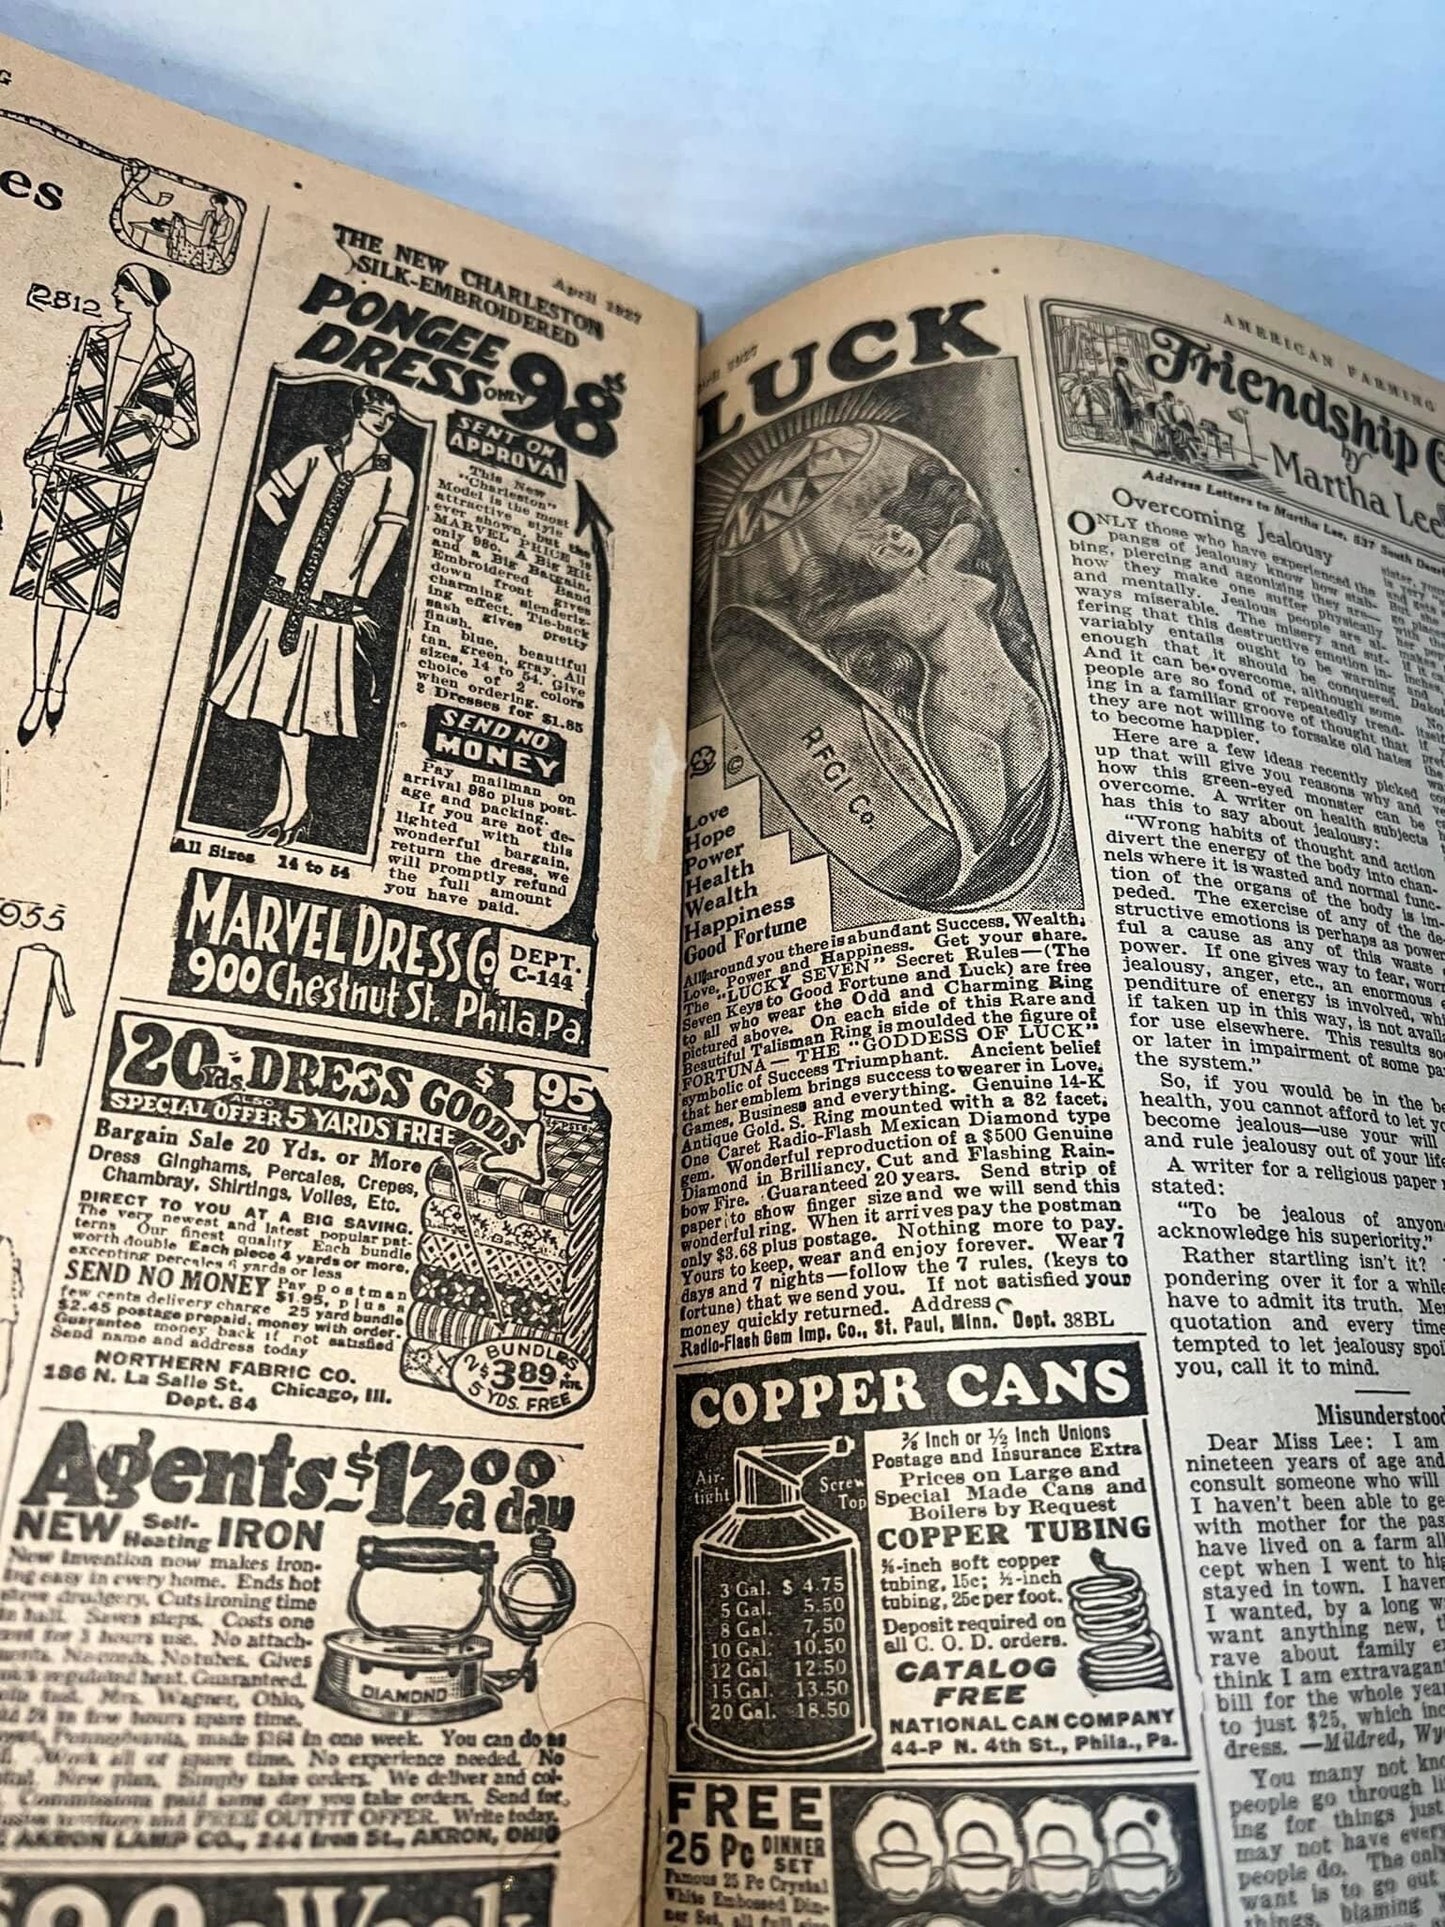 Vintage American farming magazine C 1927 Filled w cool advertising